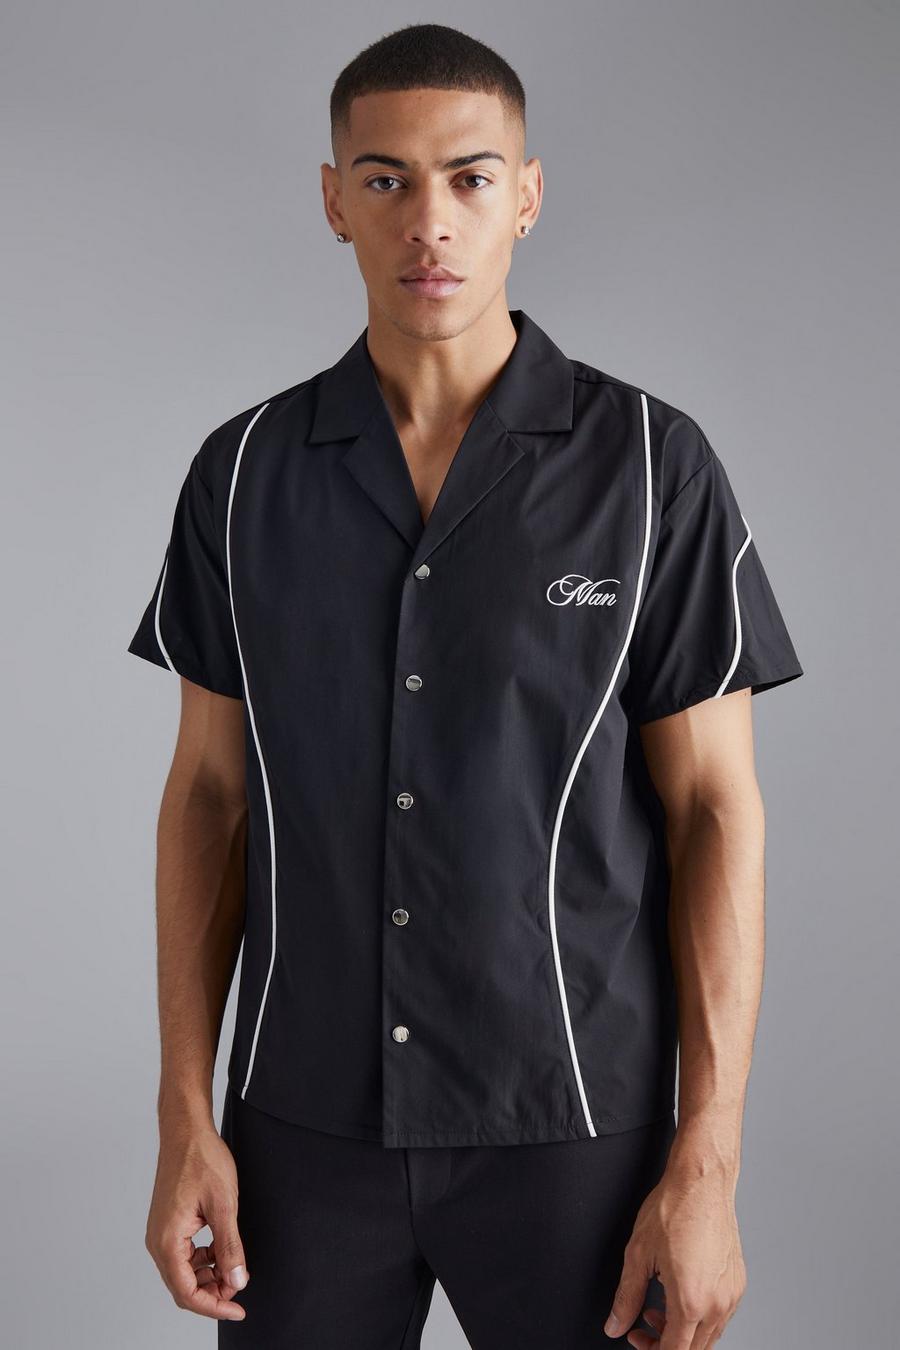 Boxy Smart Piping Embroidered Shirt, Black nero